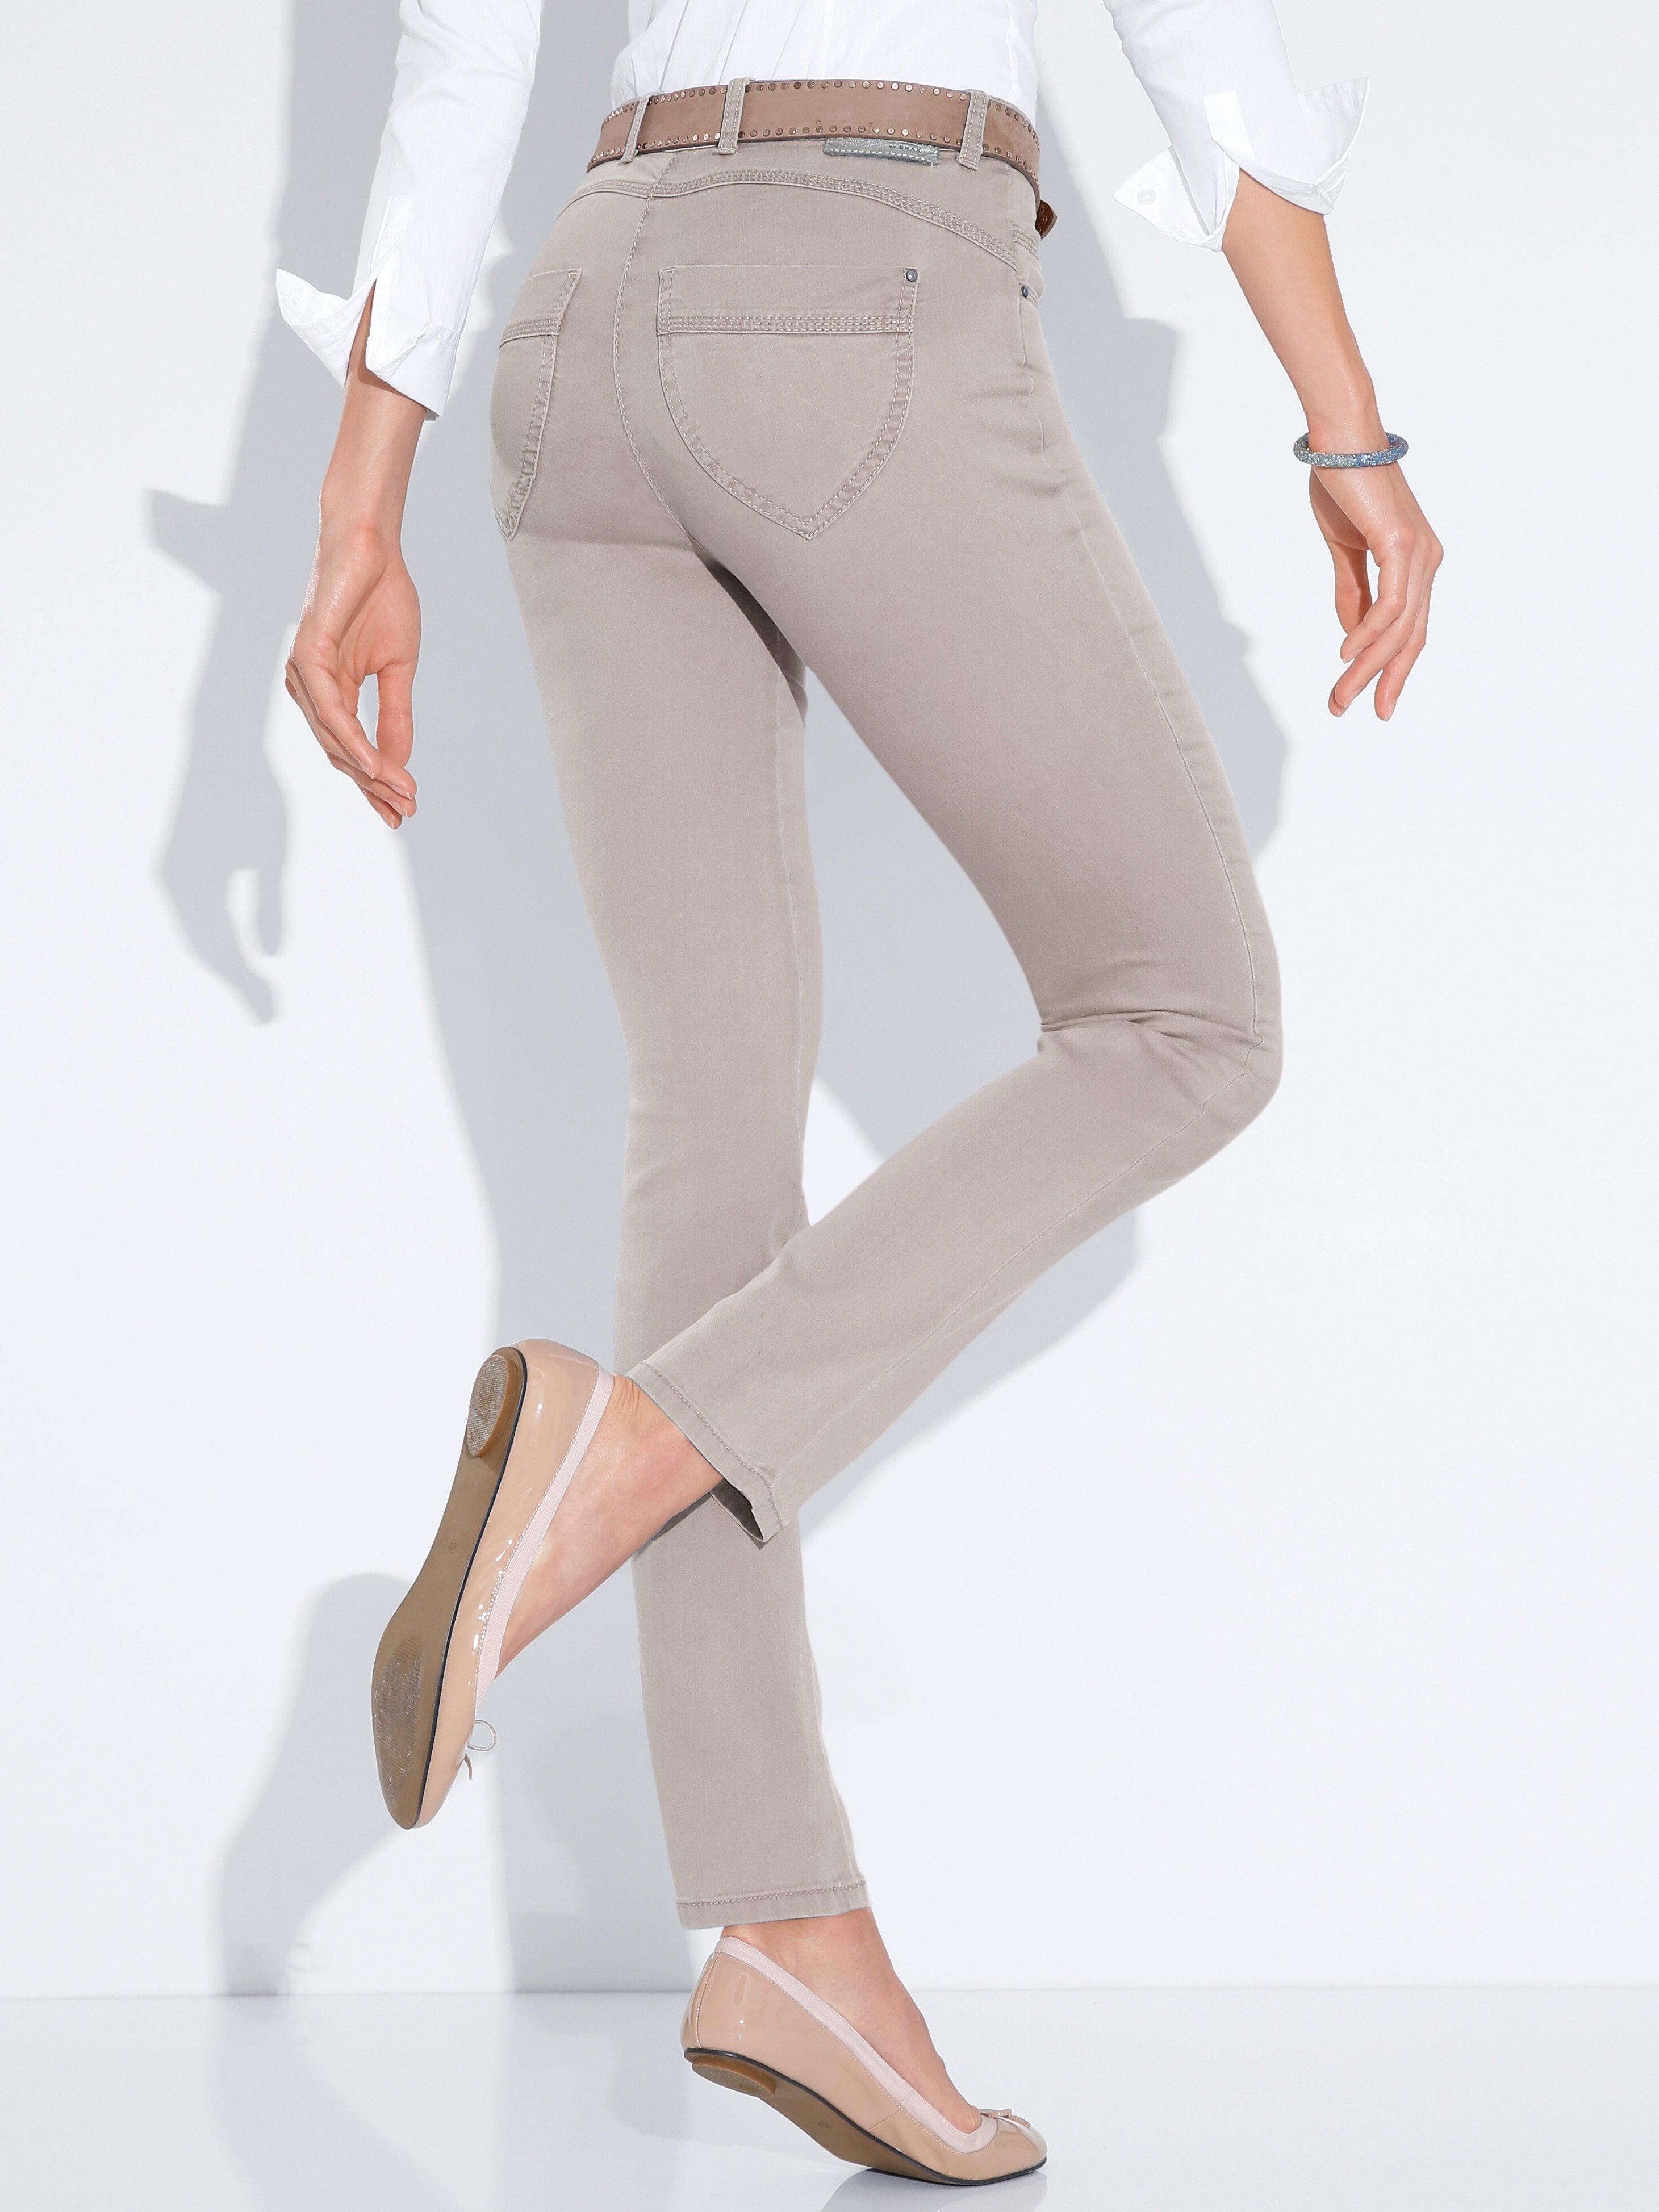 Raphaela by Brax - Corrigerende Proform S Super Slim-jeans model Lea